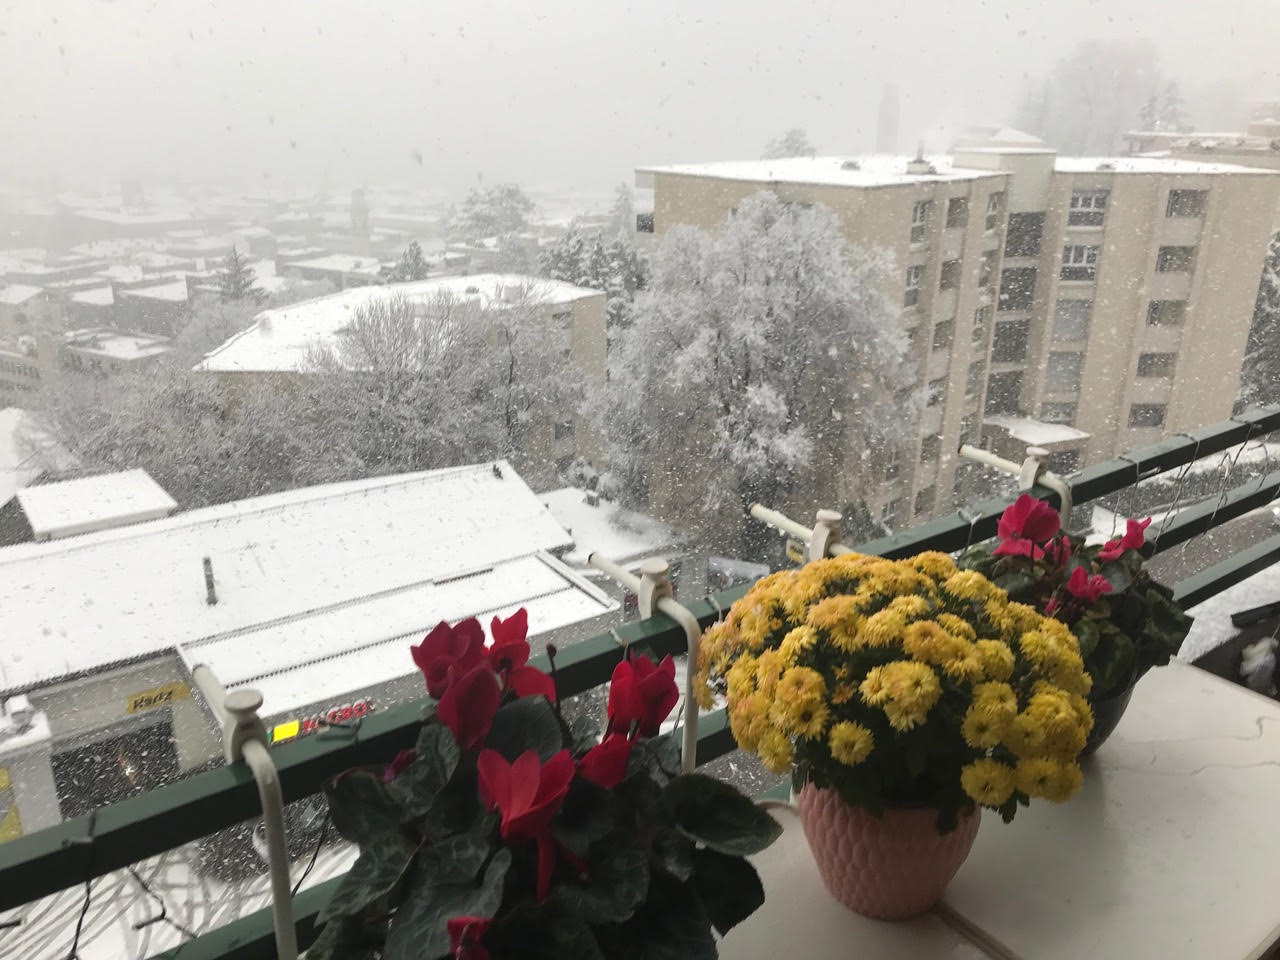 A. Gerosa: Snow in Lugano from my balcony